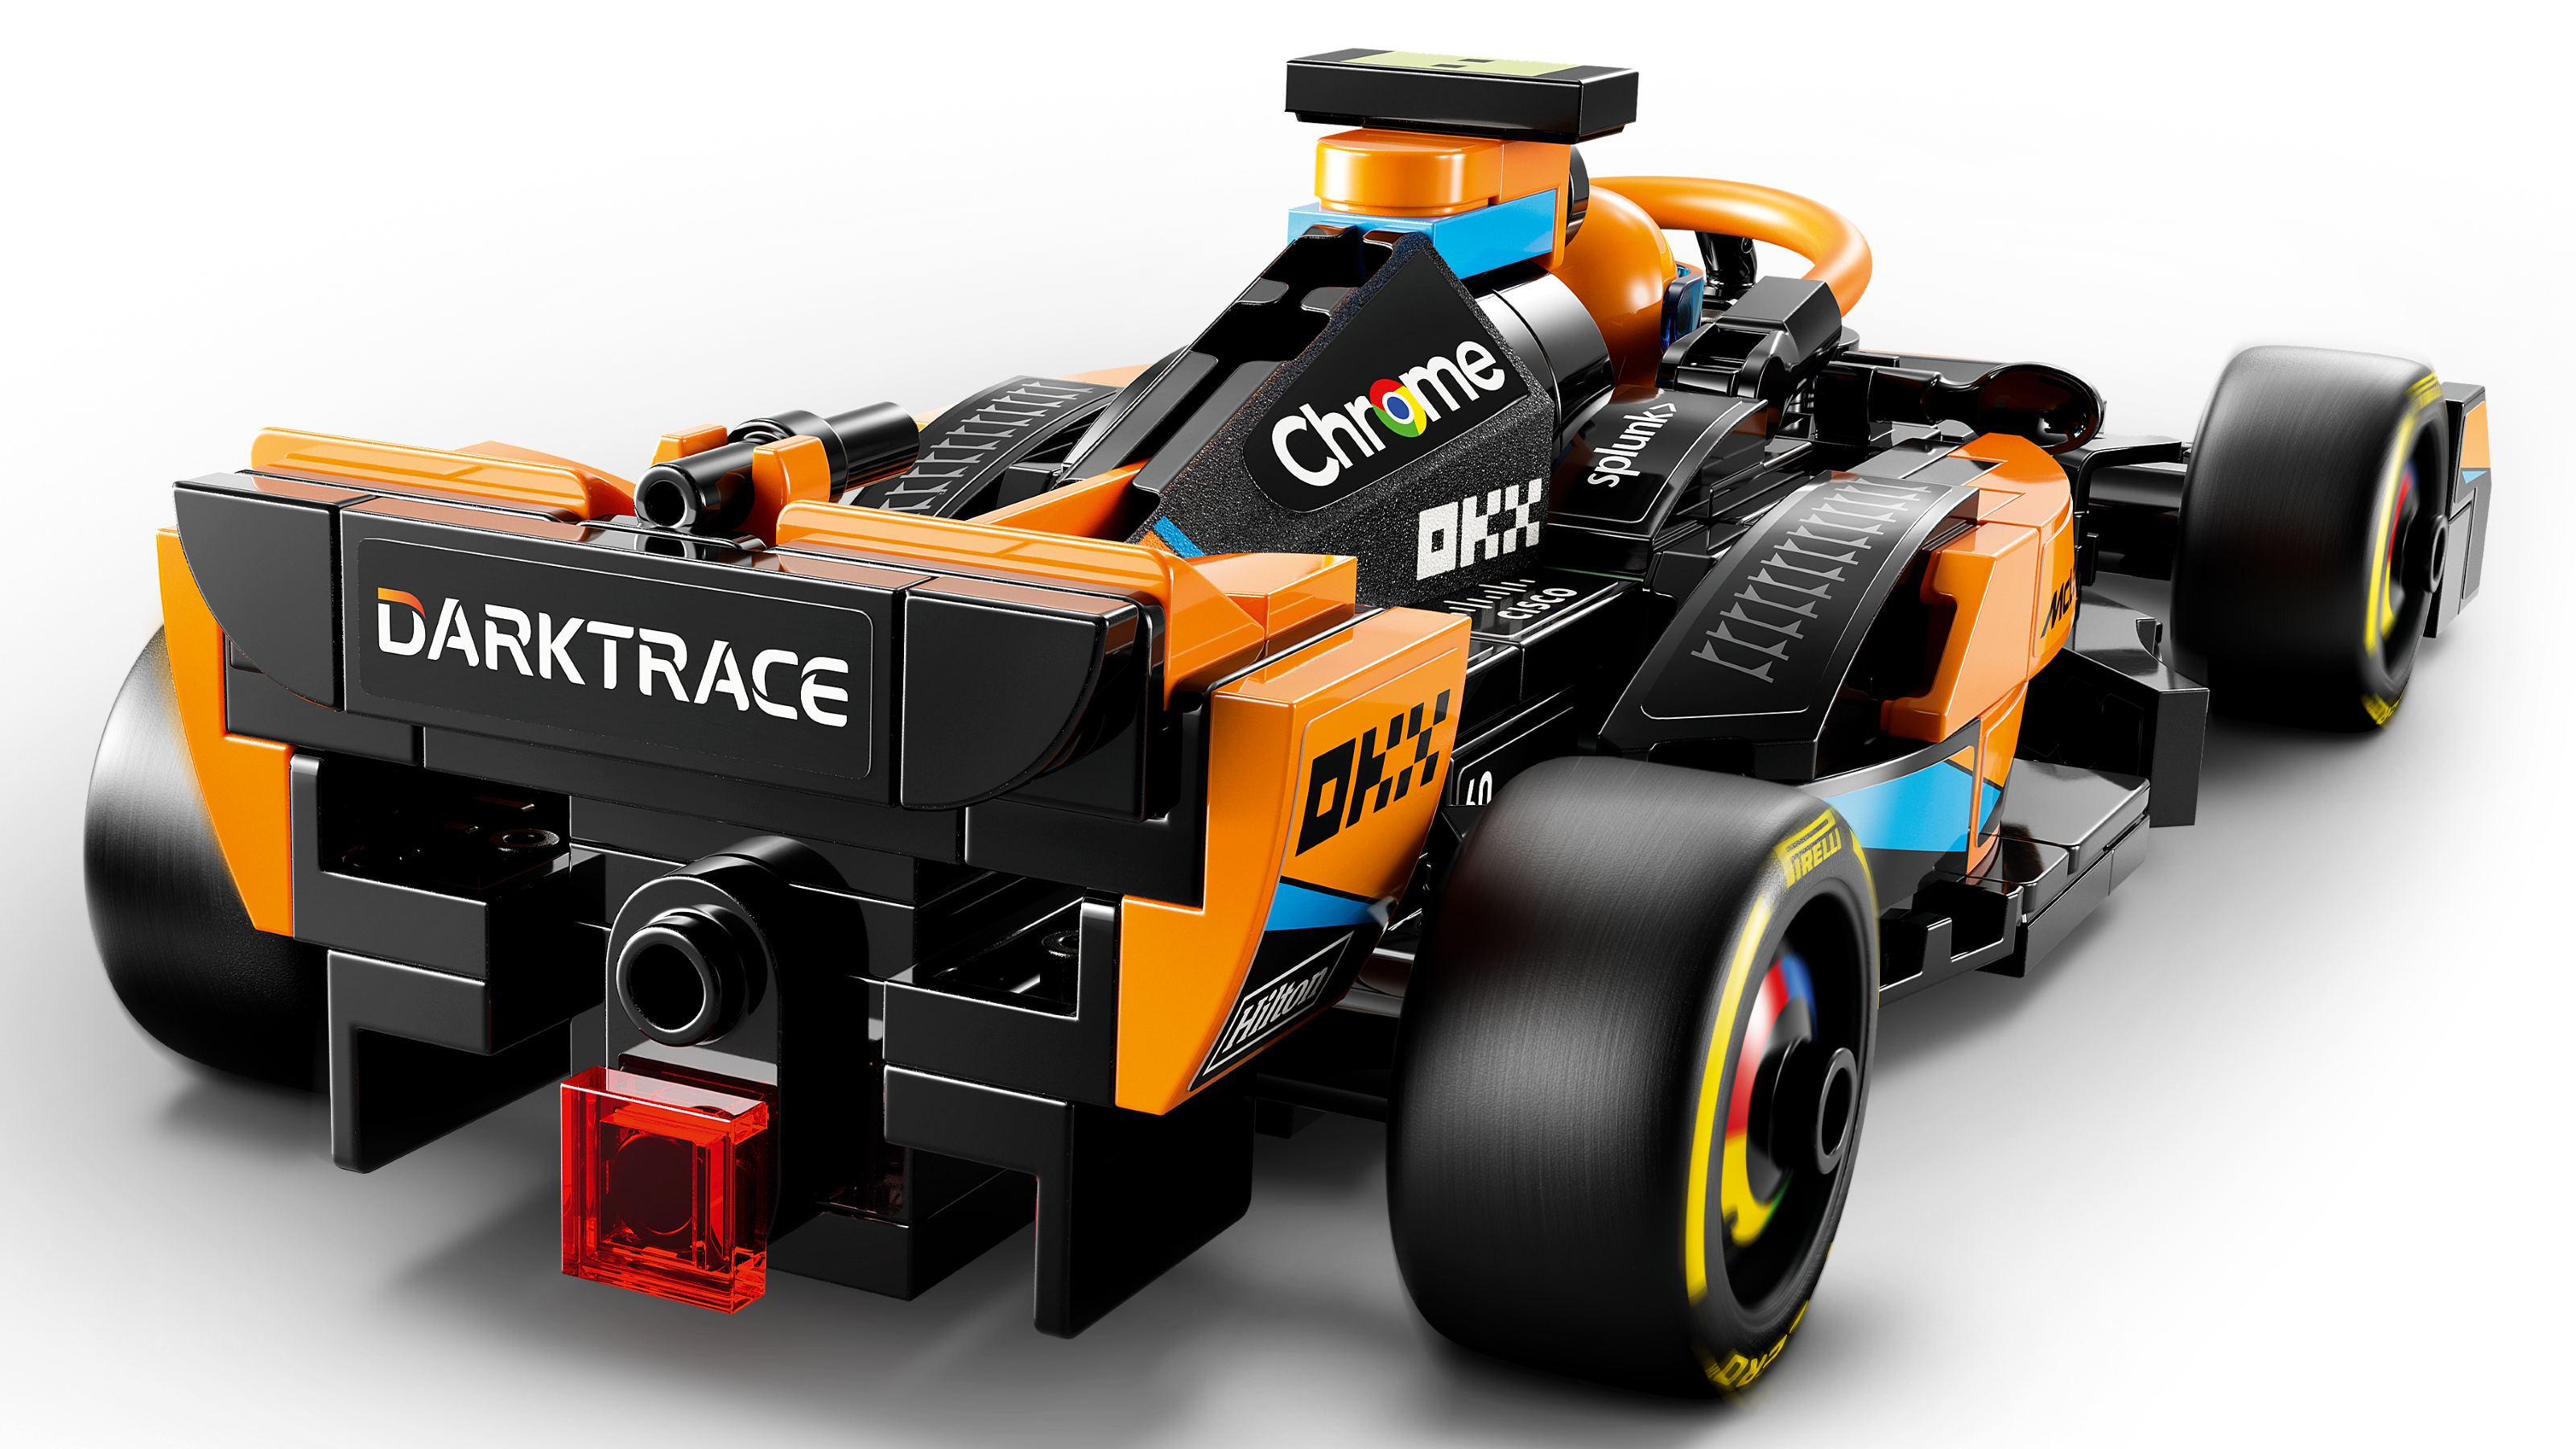 2023 McLaren Formula 1 Race Car 76919, Speed Champions